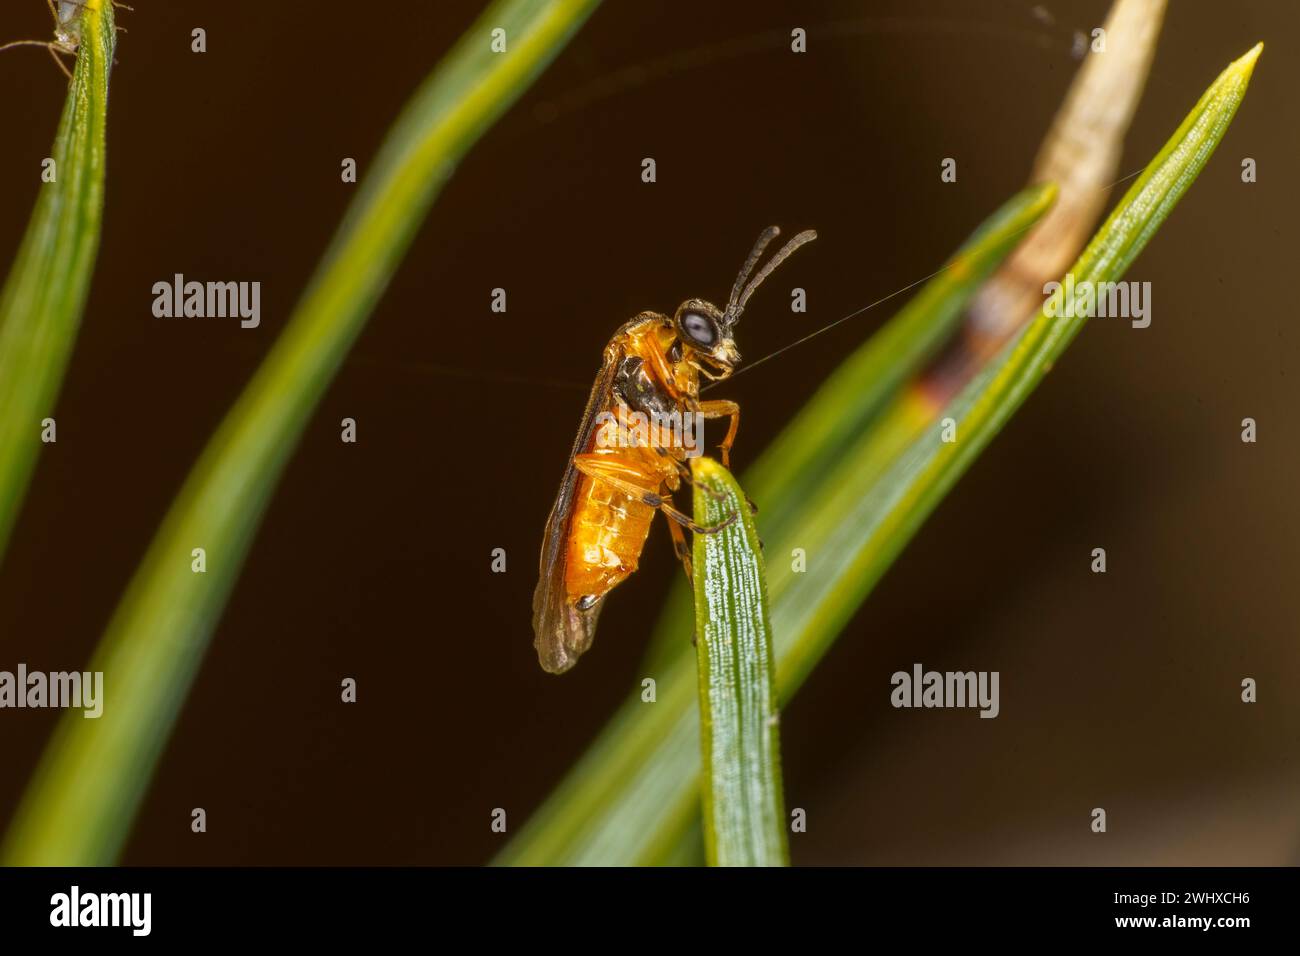 Athalia rosae famiglia Tenthredinidae genere Athalia Hymenoptera Turnip sawfly Wild natue insetti carta da parati, foto, fotografia Foto Stock